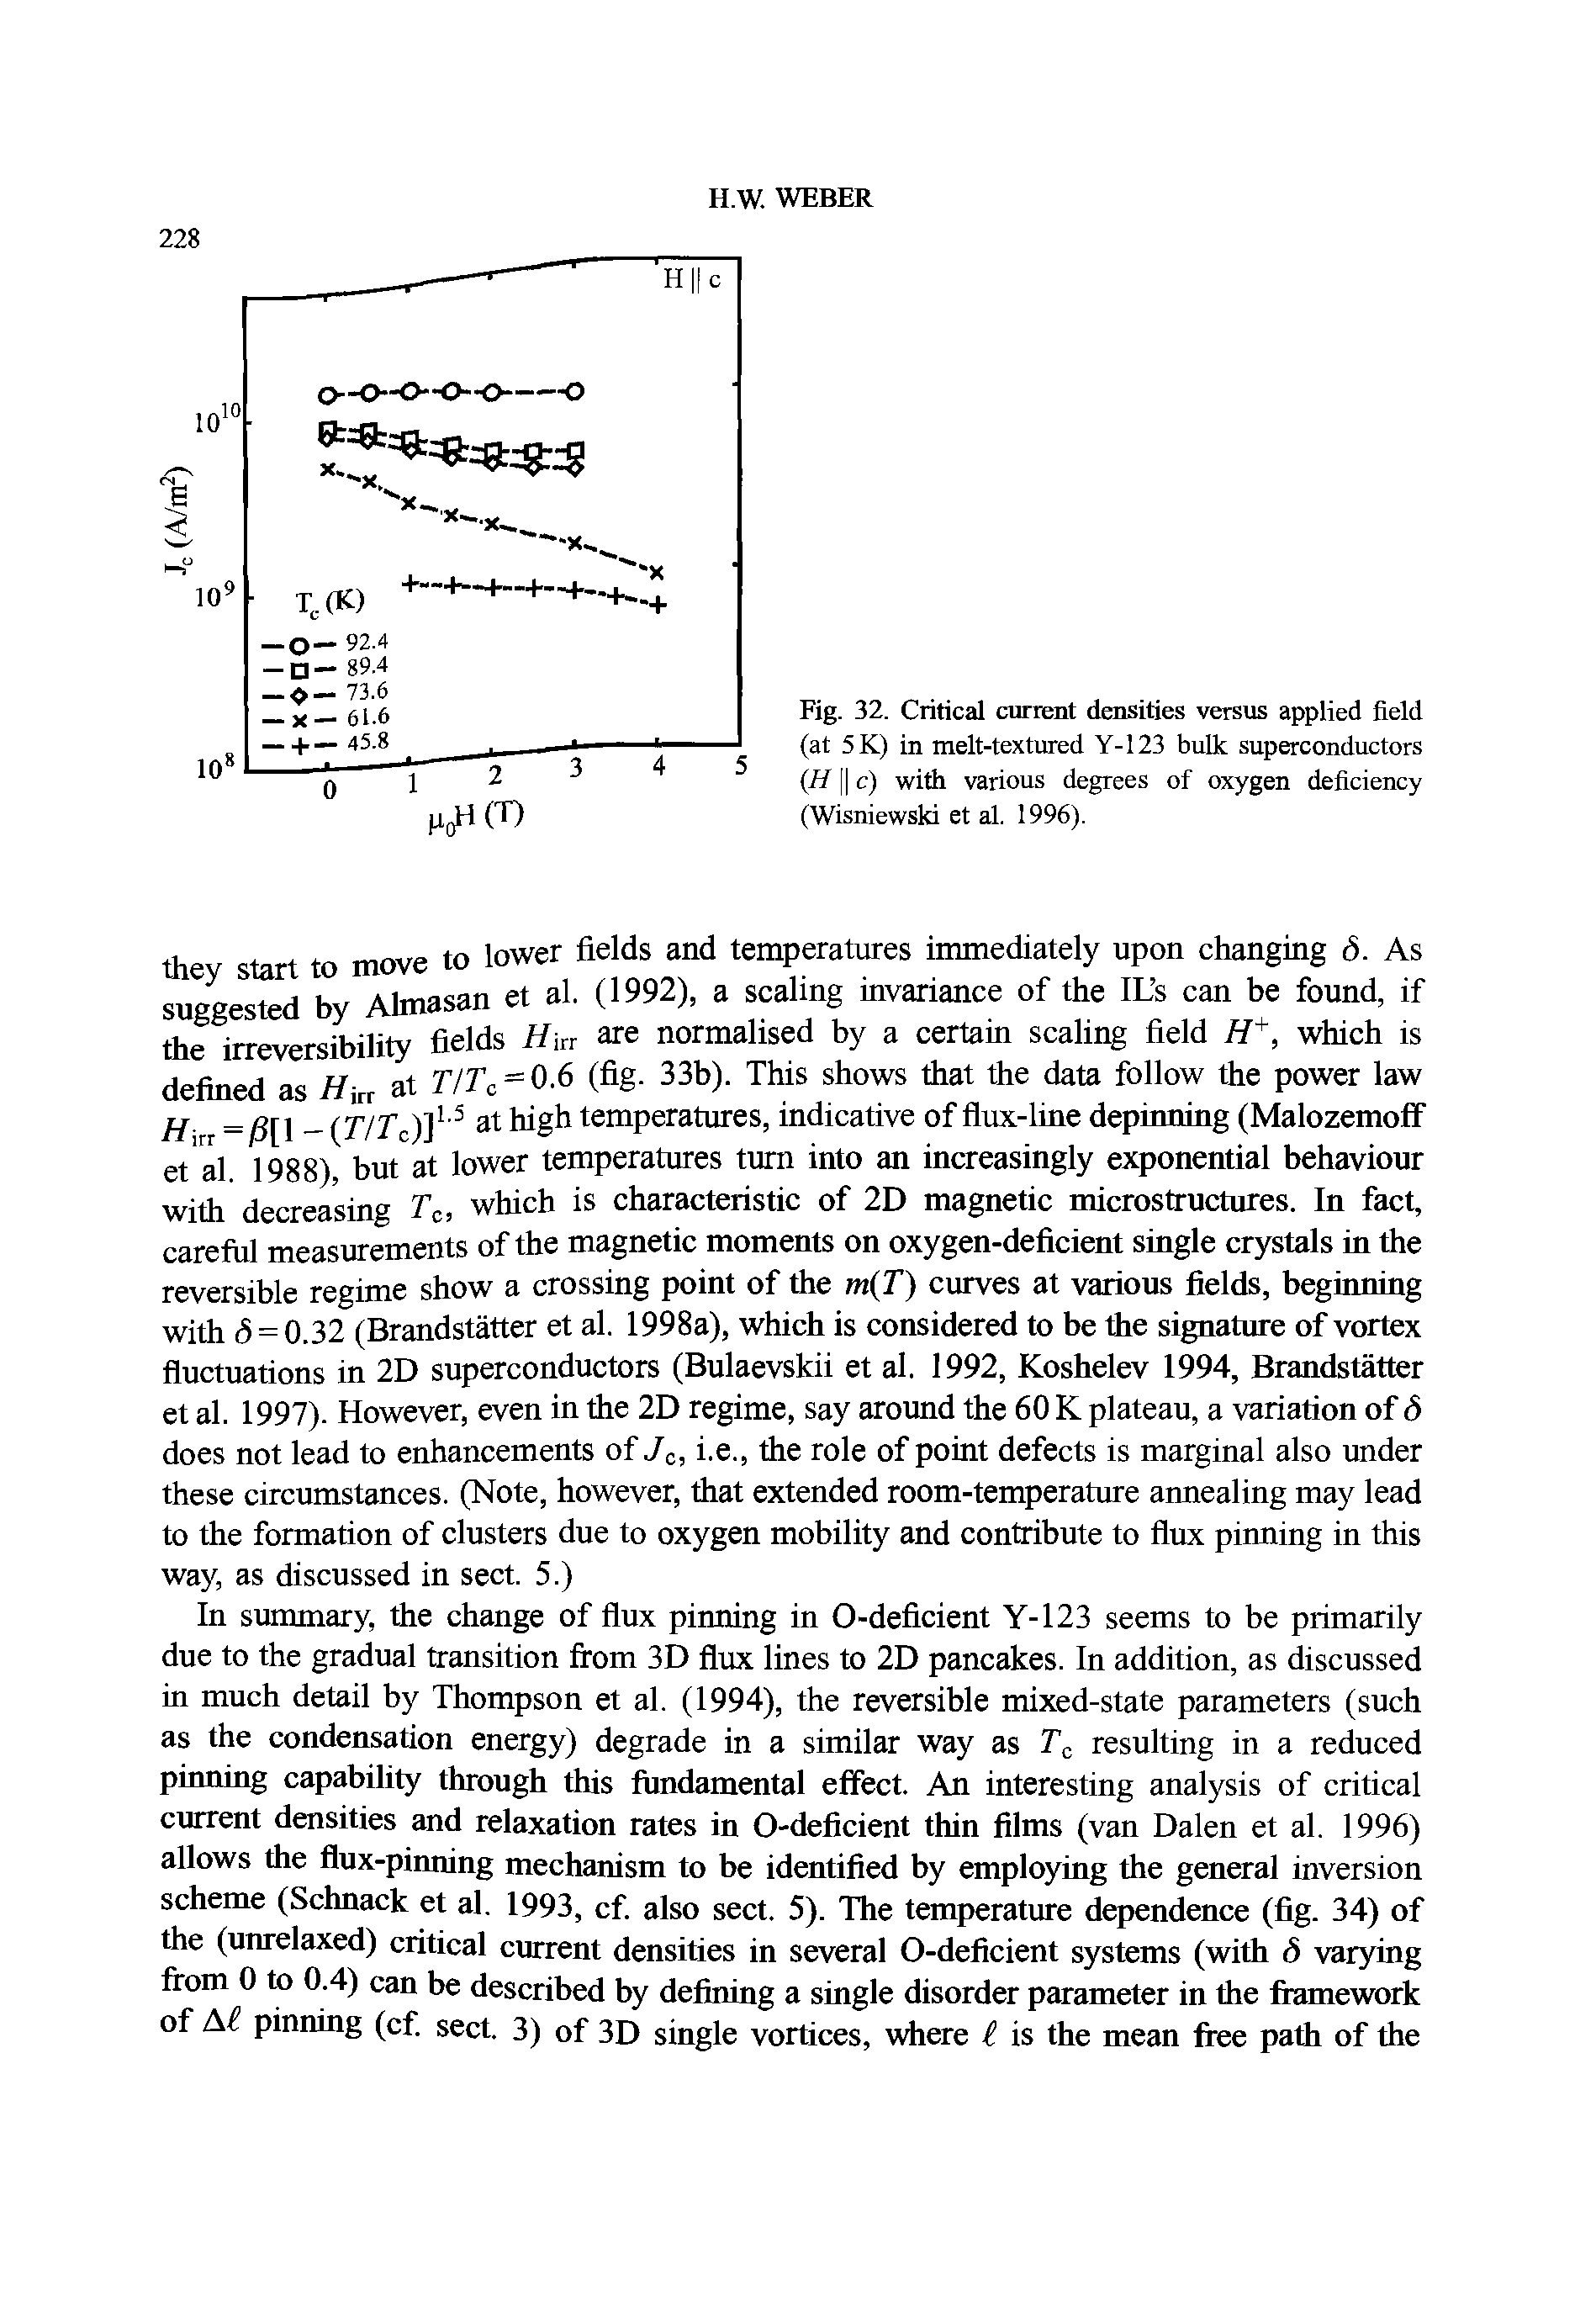 Fig. 32. Critical curient deosities versus applied field (at 5K) in melt-textured Y-123 bulk superconductors HII c) with various degrees of oxygen deficiency (Wisniewski et al. 1996).